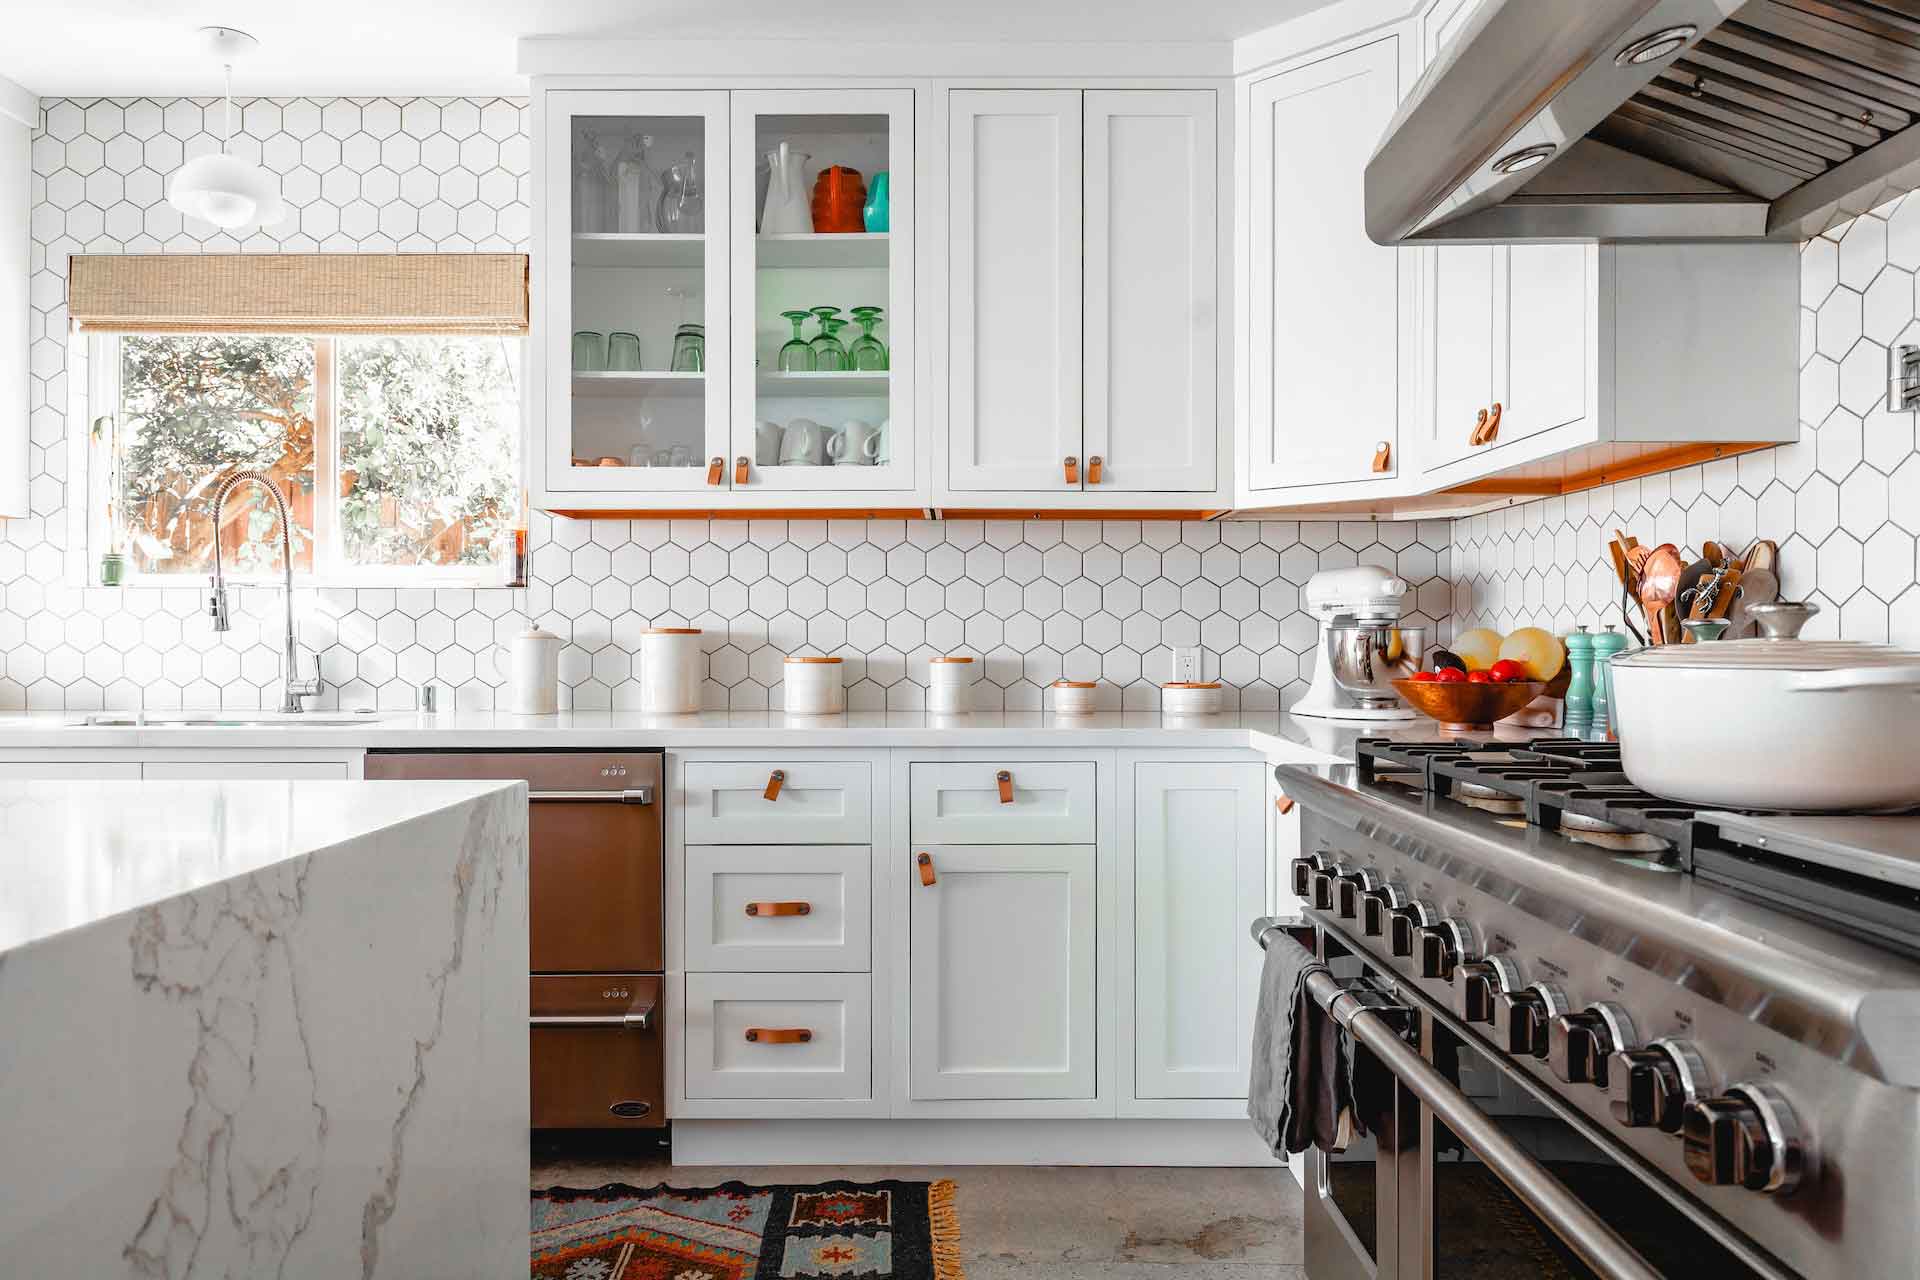 Newly remodeled kitchen with white quartz countertops and honeycomb tile backsplash